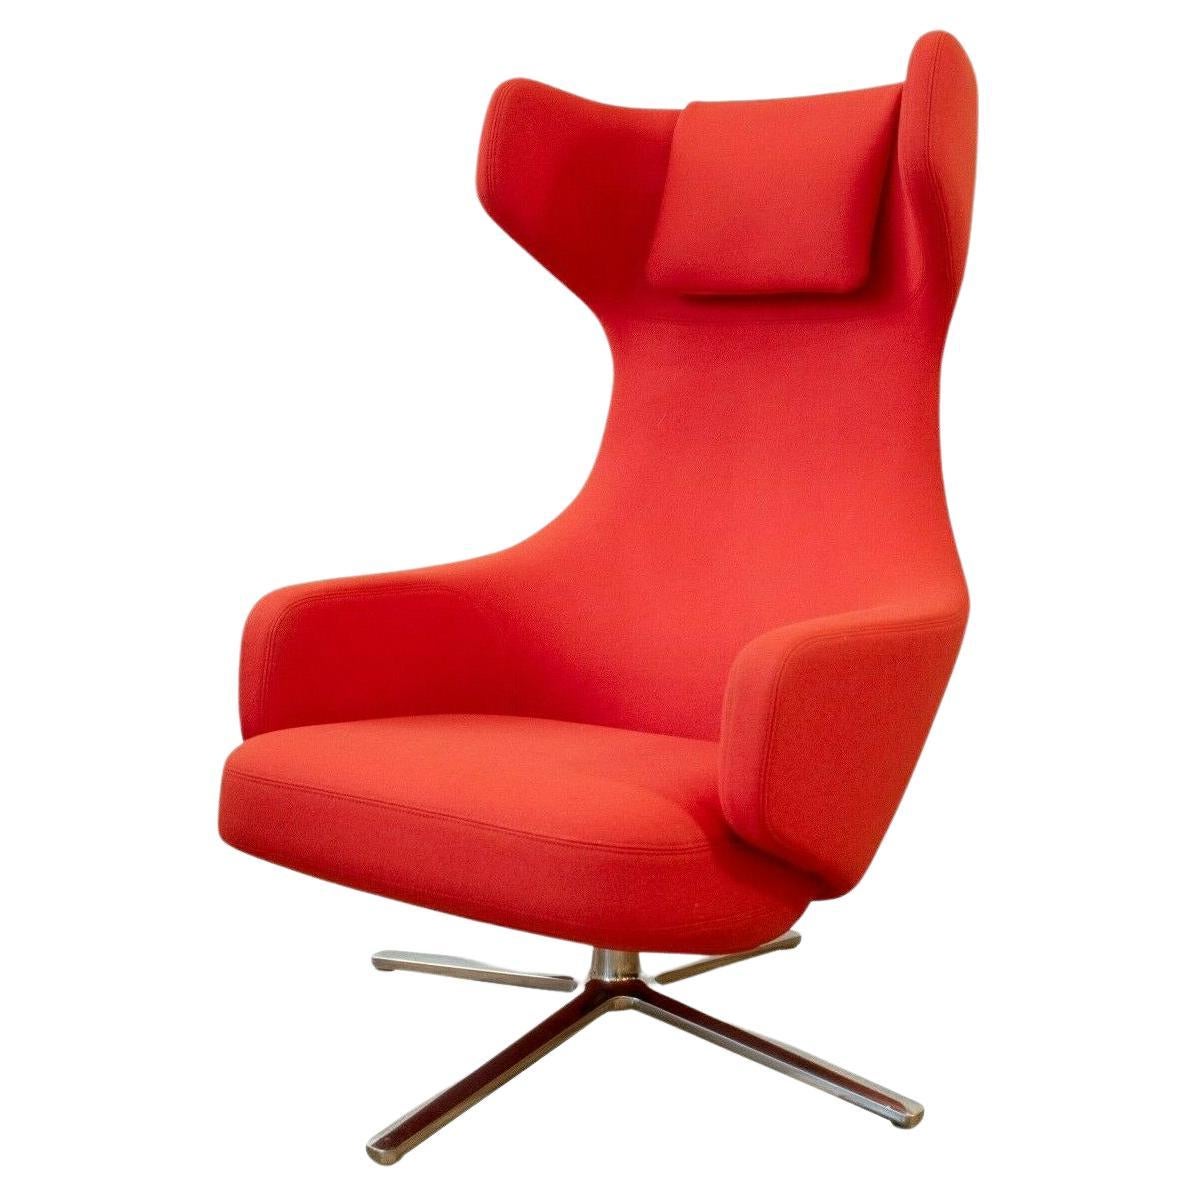 Pair of Vitra Grand Repos Red Lounge Chair by Antonio Citterio